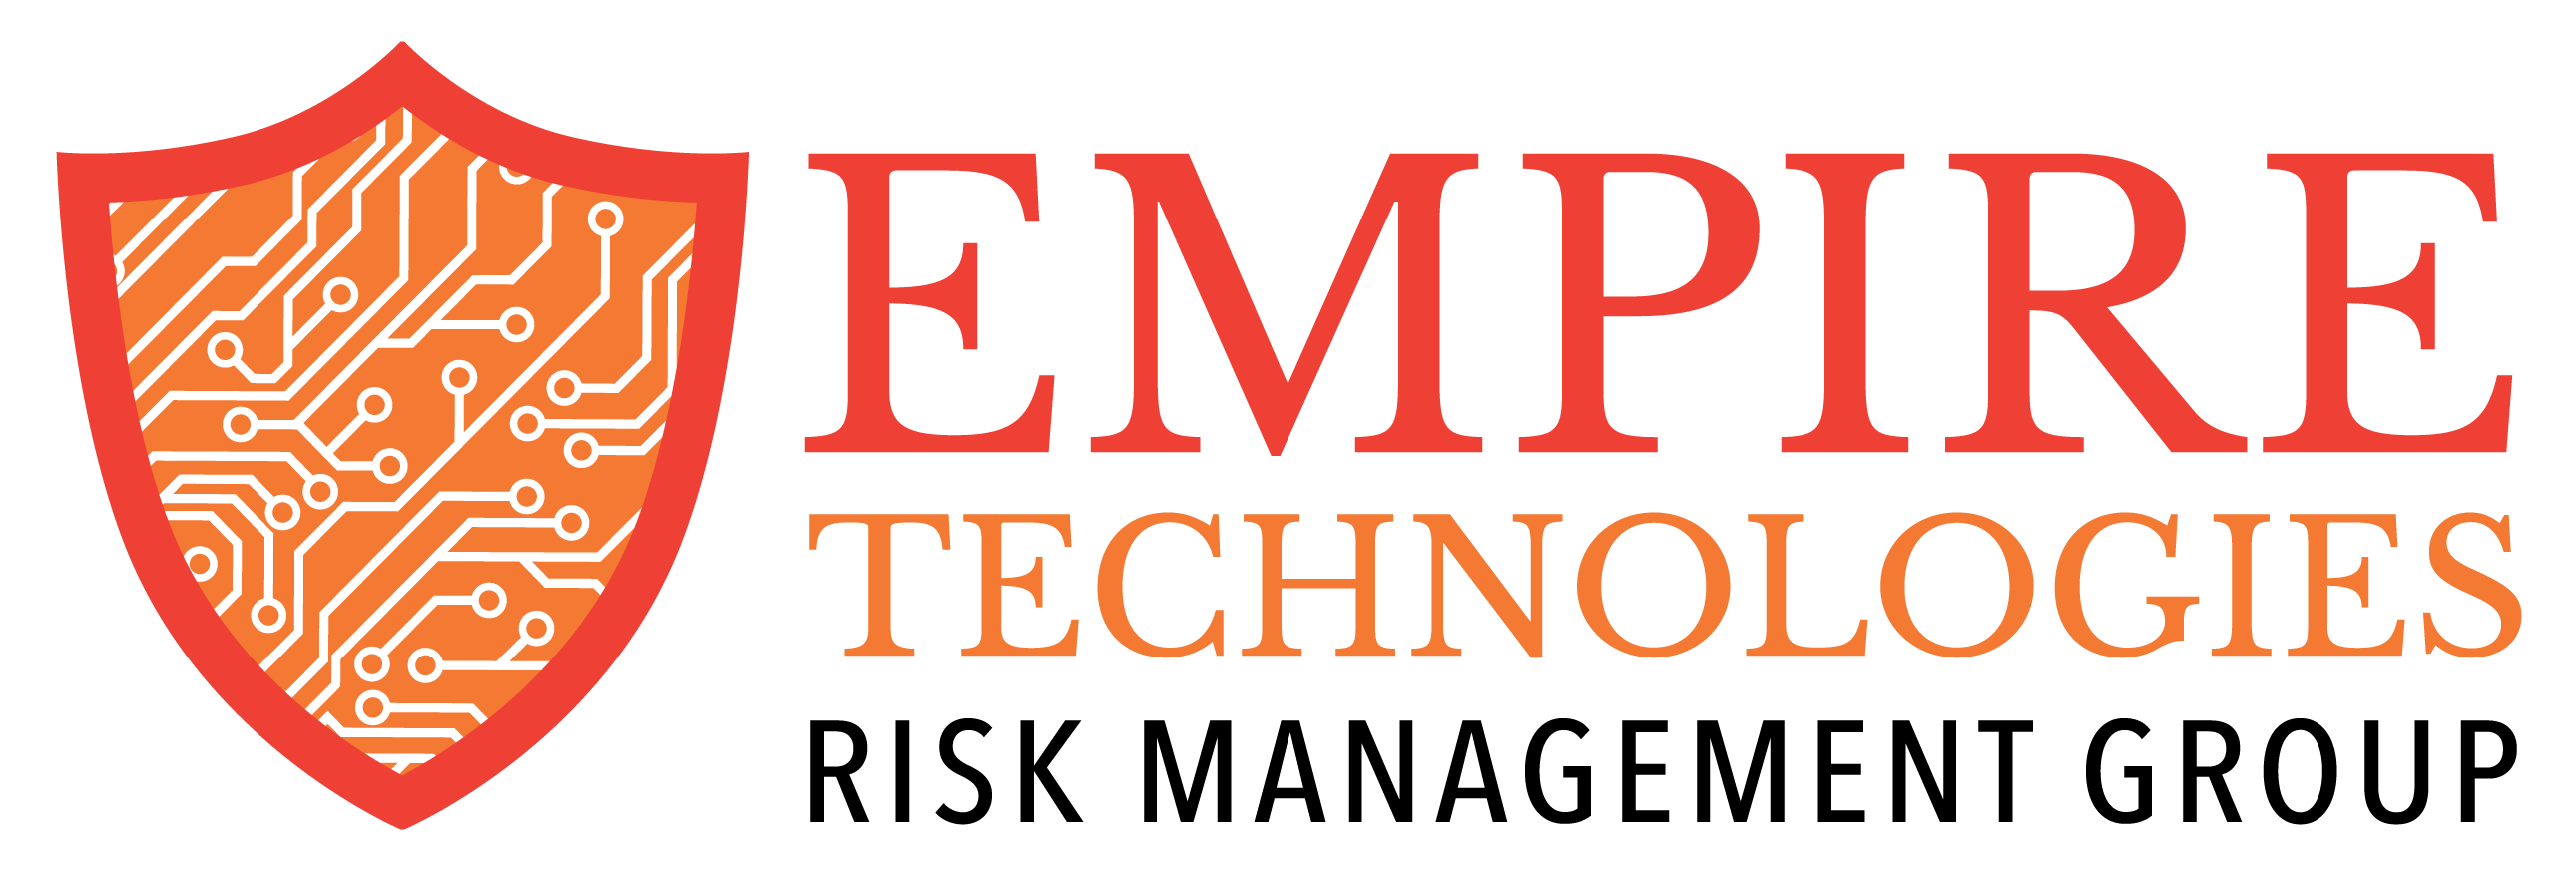 ETRM Group Logo.png